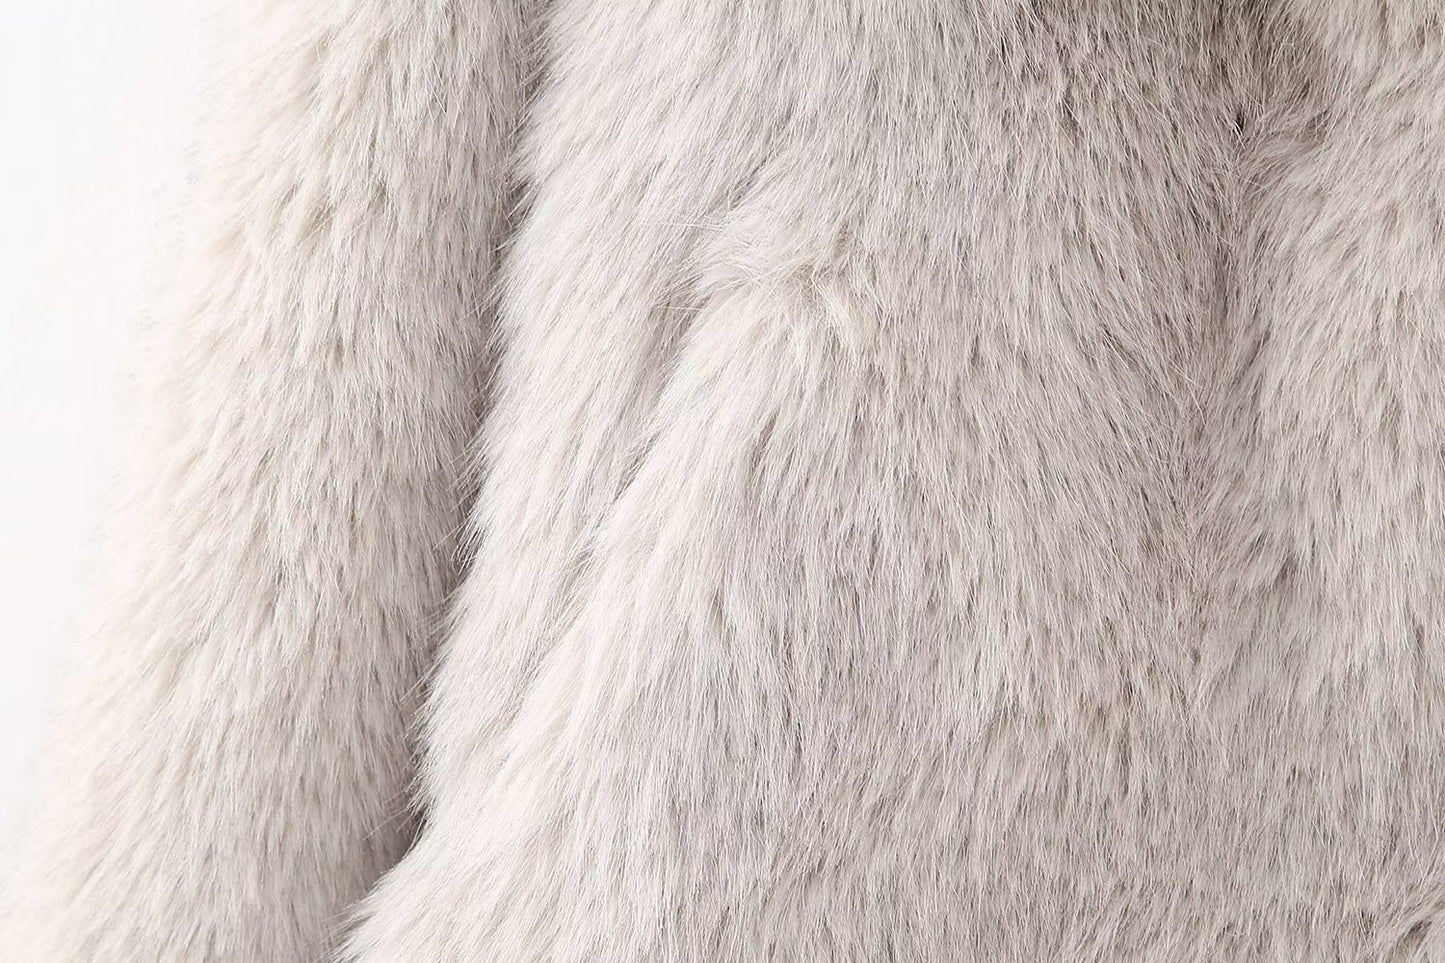 Fur coat aesthetic | Short Gray Faux Fur Jacket